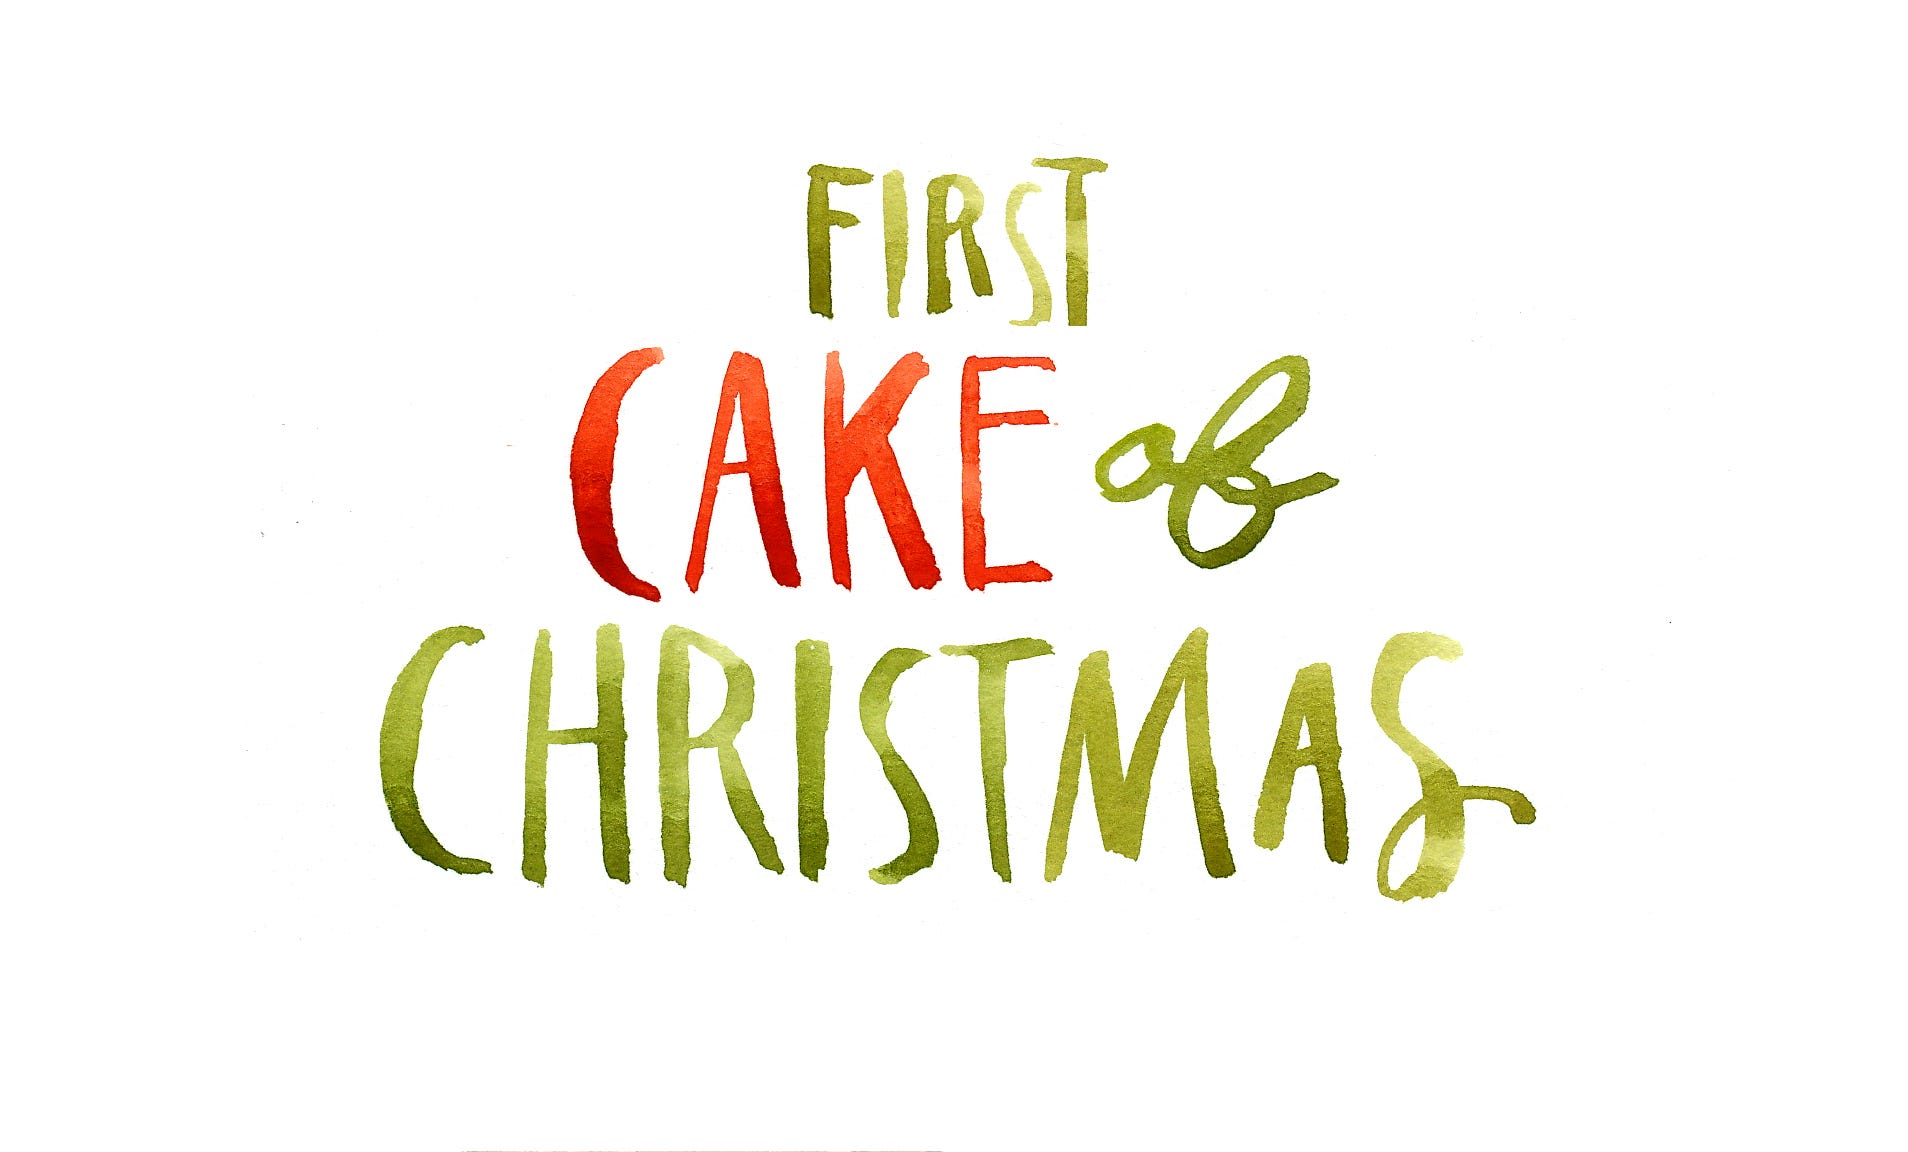 Twelve Cakes of Christmas | by Big Sur Bakery | Medium